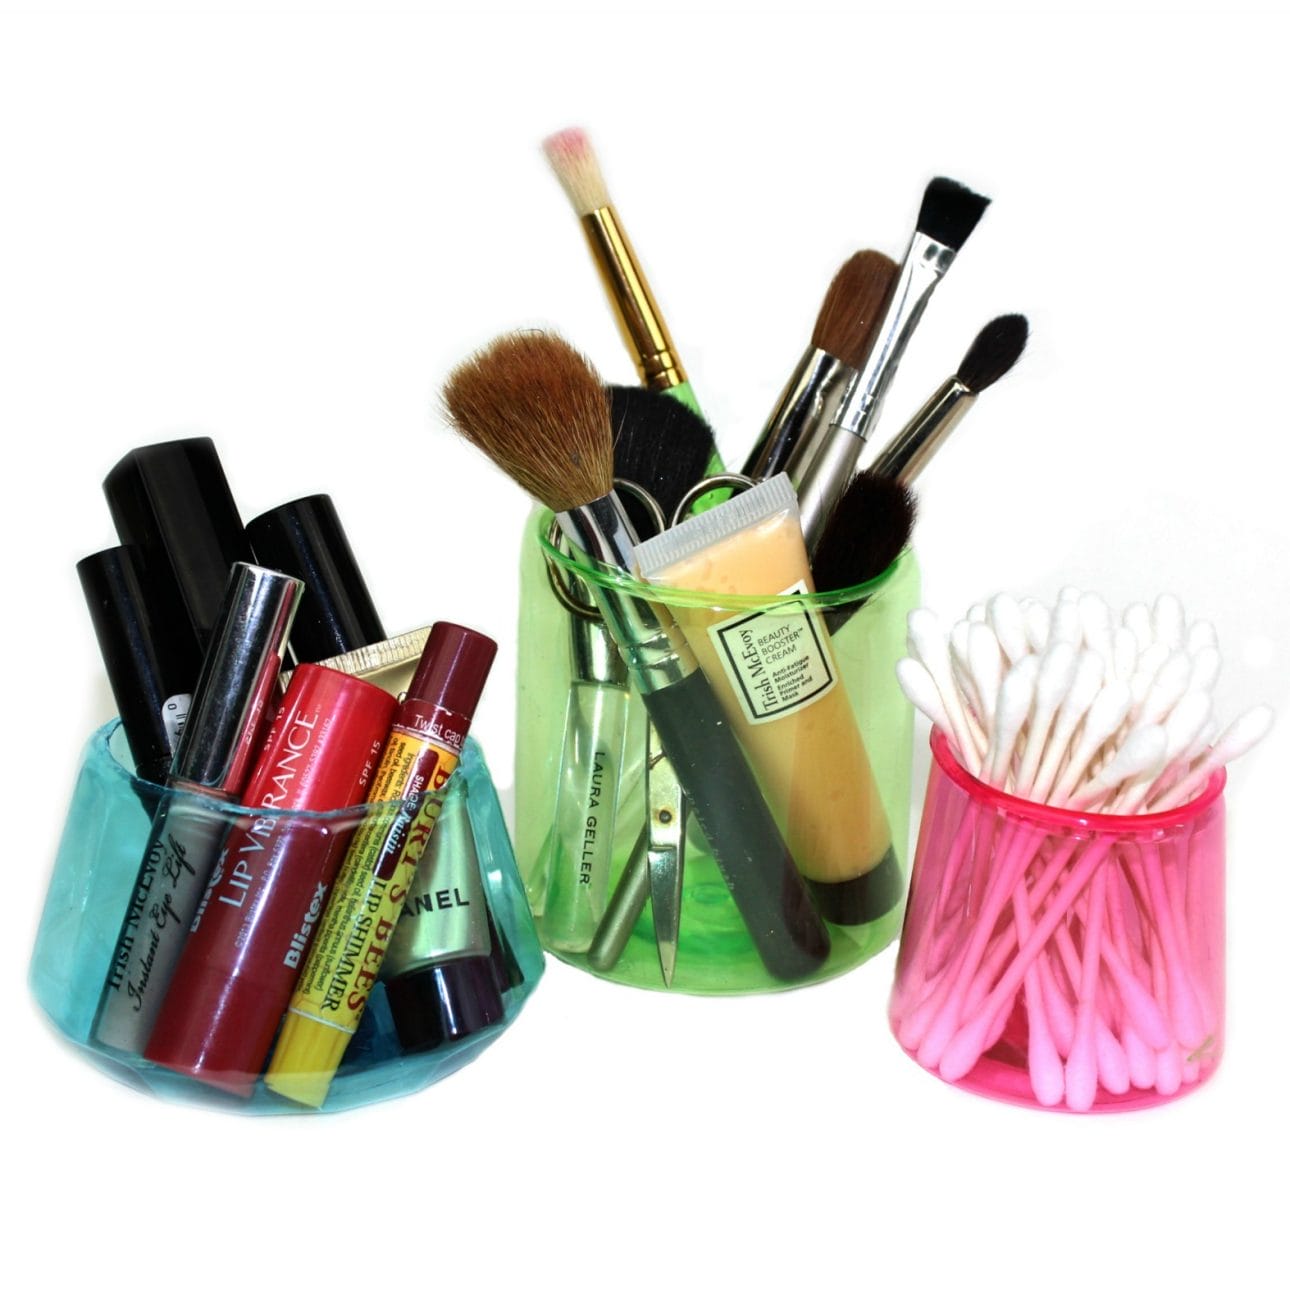 countertop makeup storage ideas